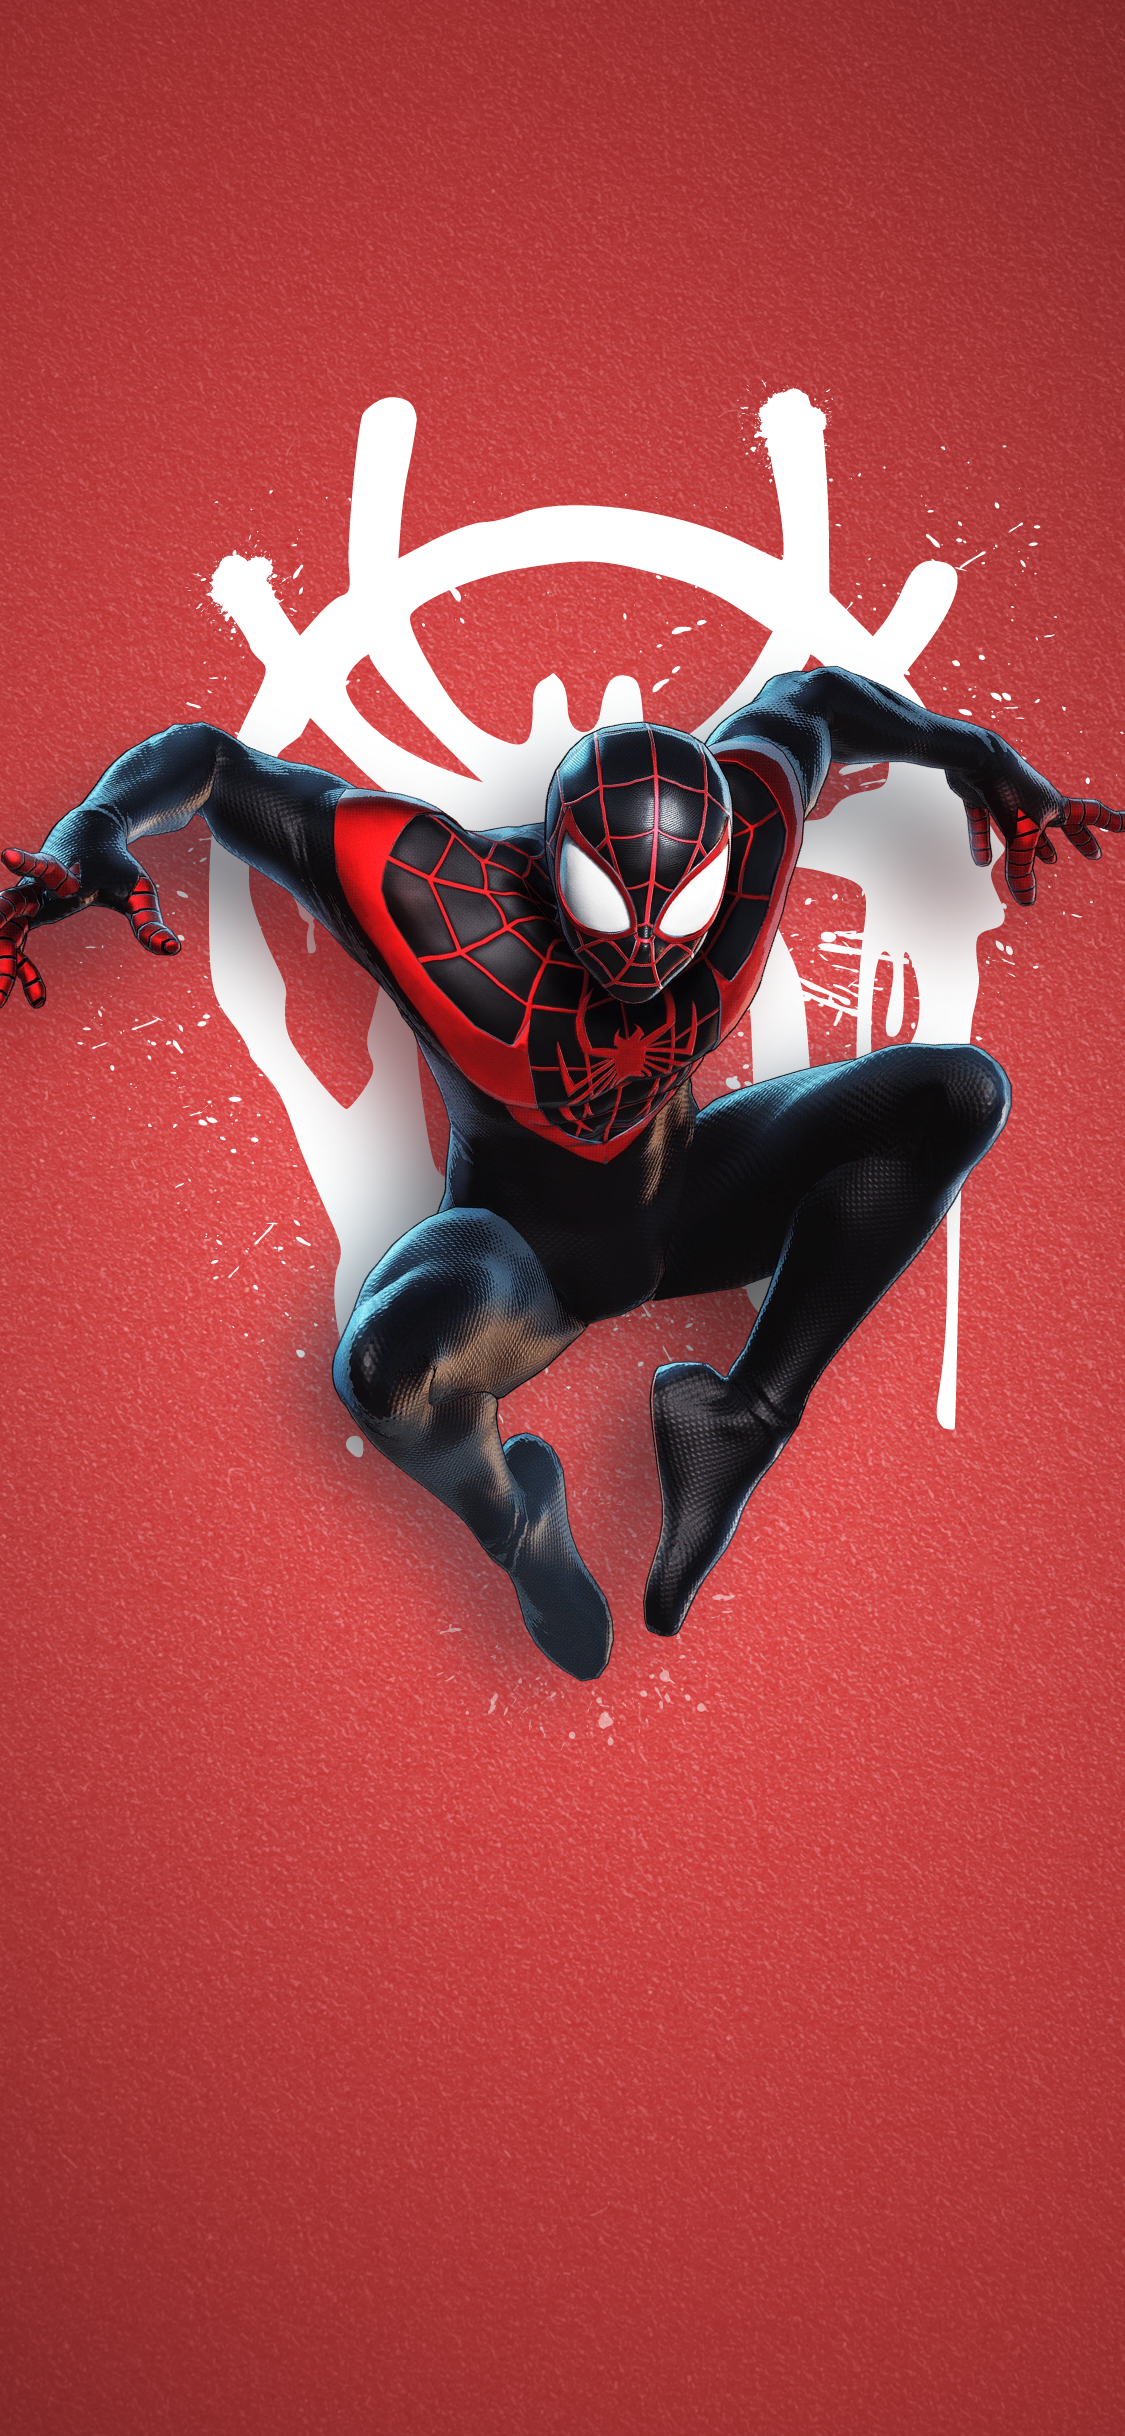 Playstation 5 Miles Morales. Marvel spiderman art, Marvel superhero posters, Miles morales spiderman